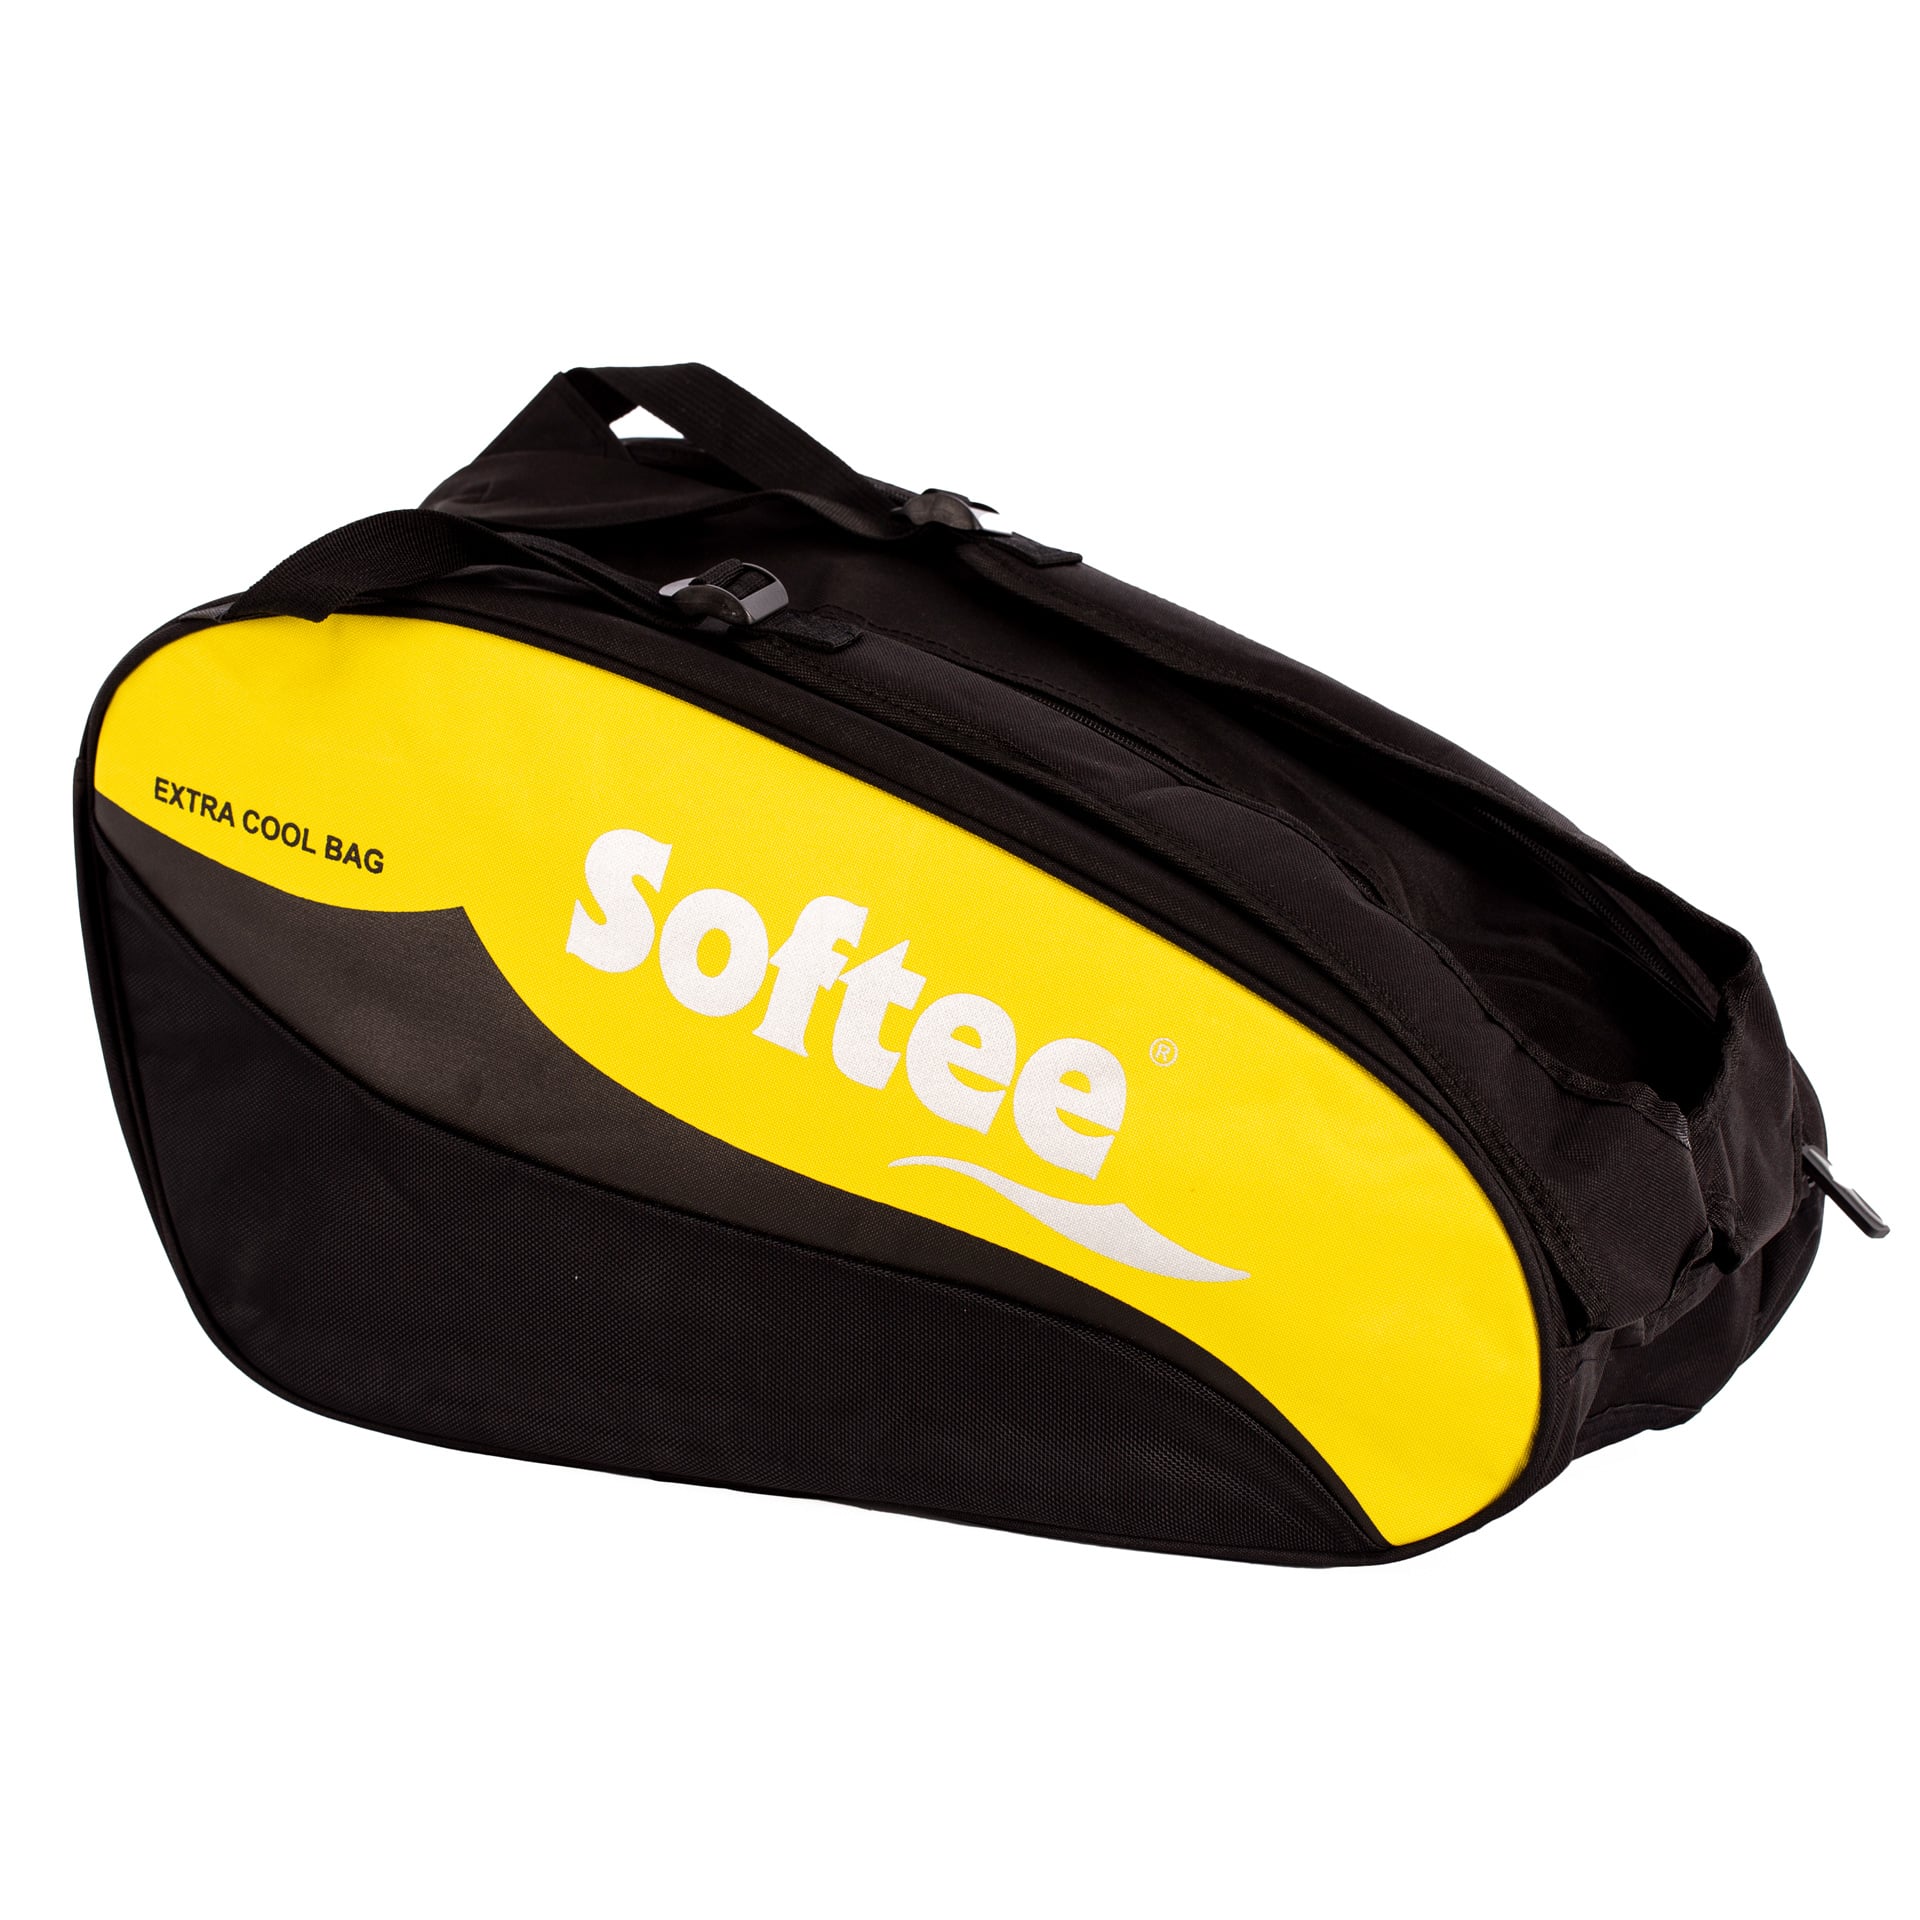 Paletero Softee Extra Cool Bag 1